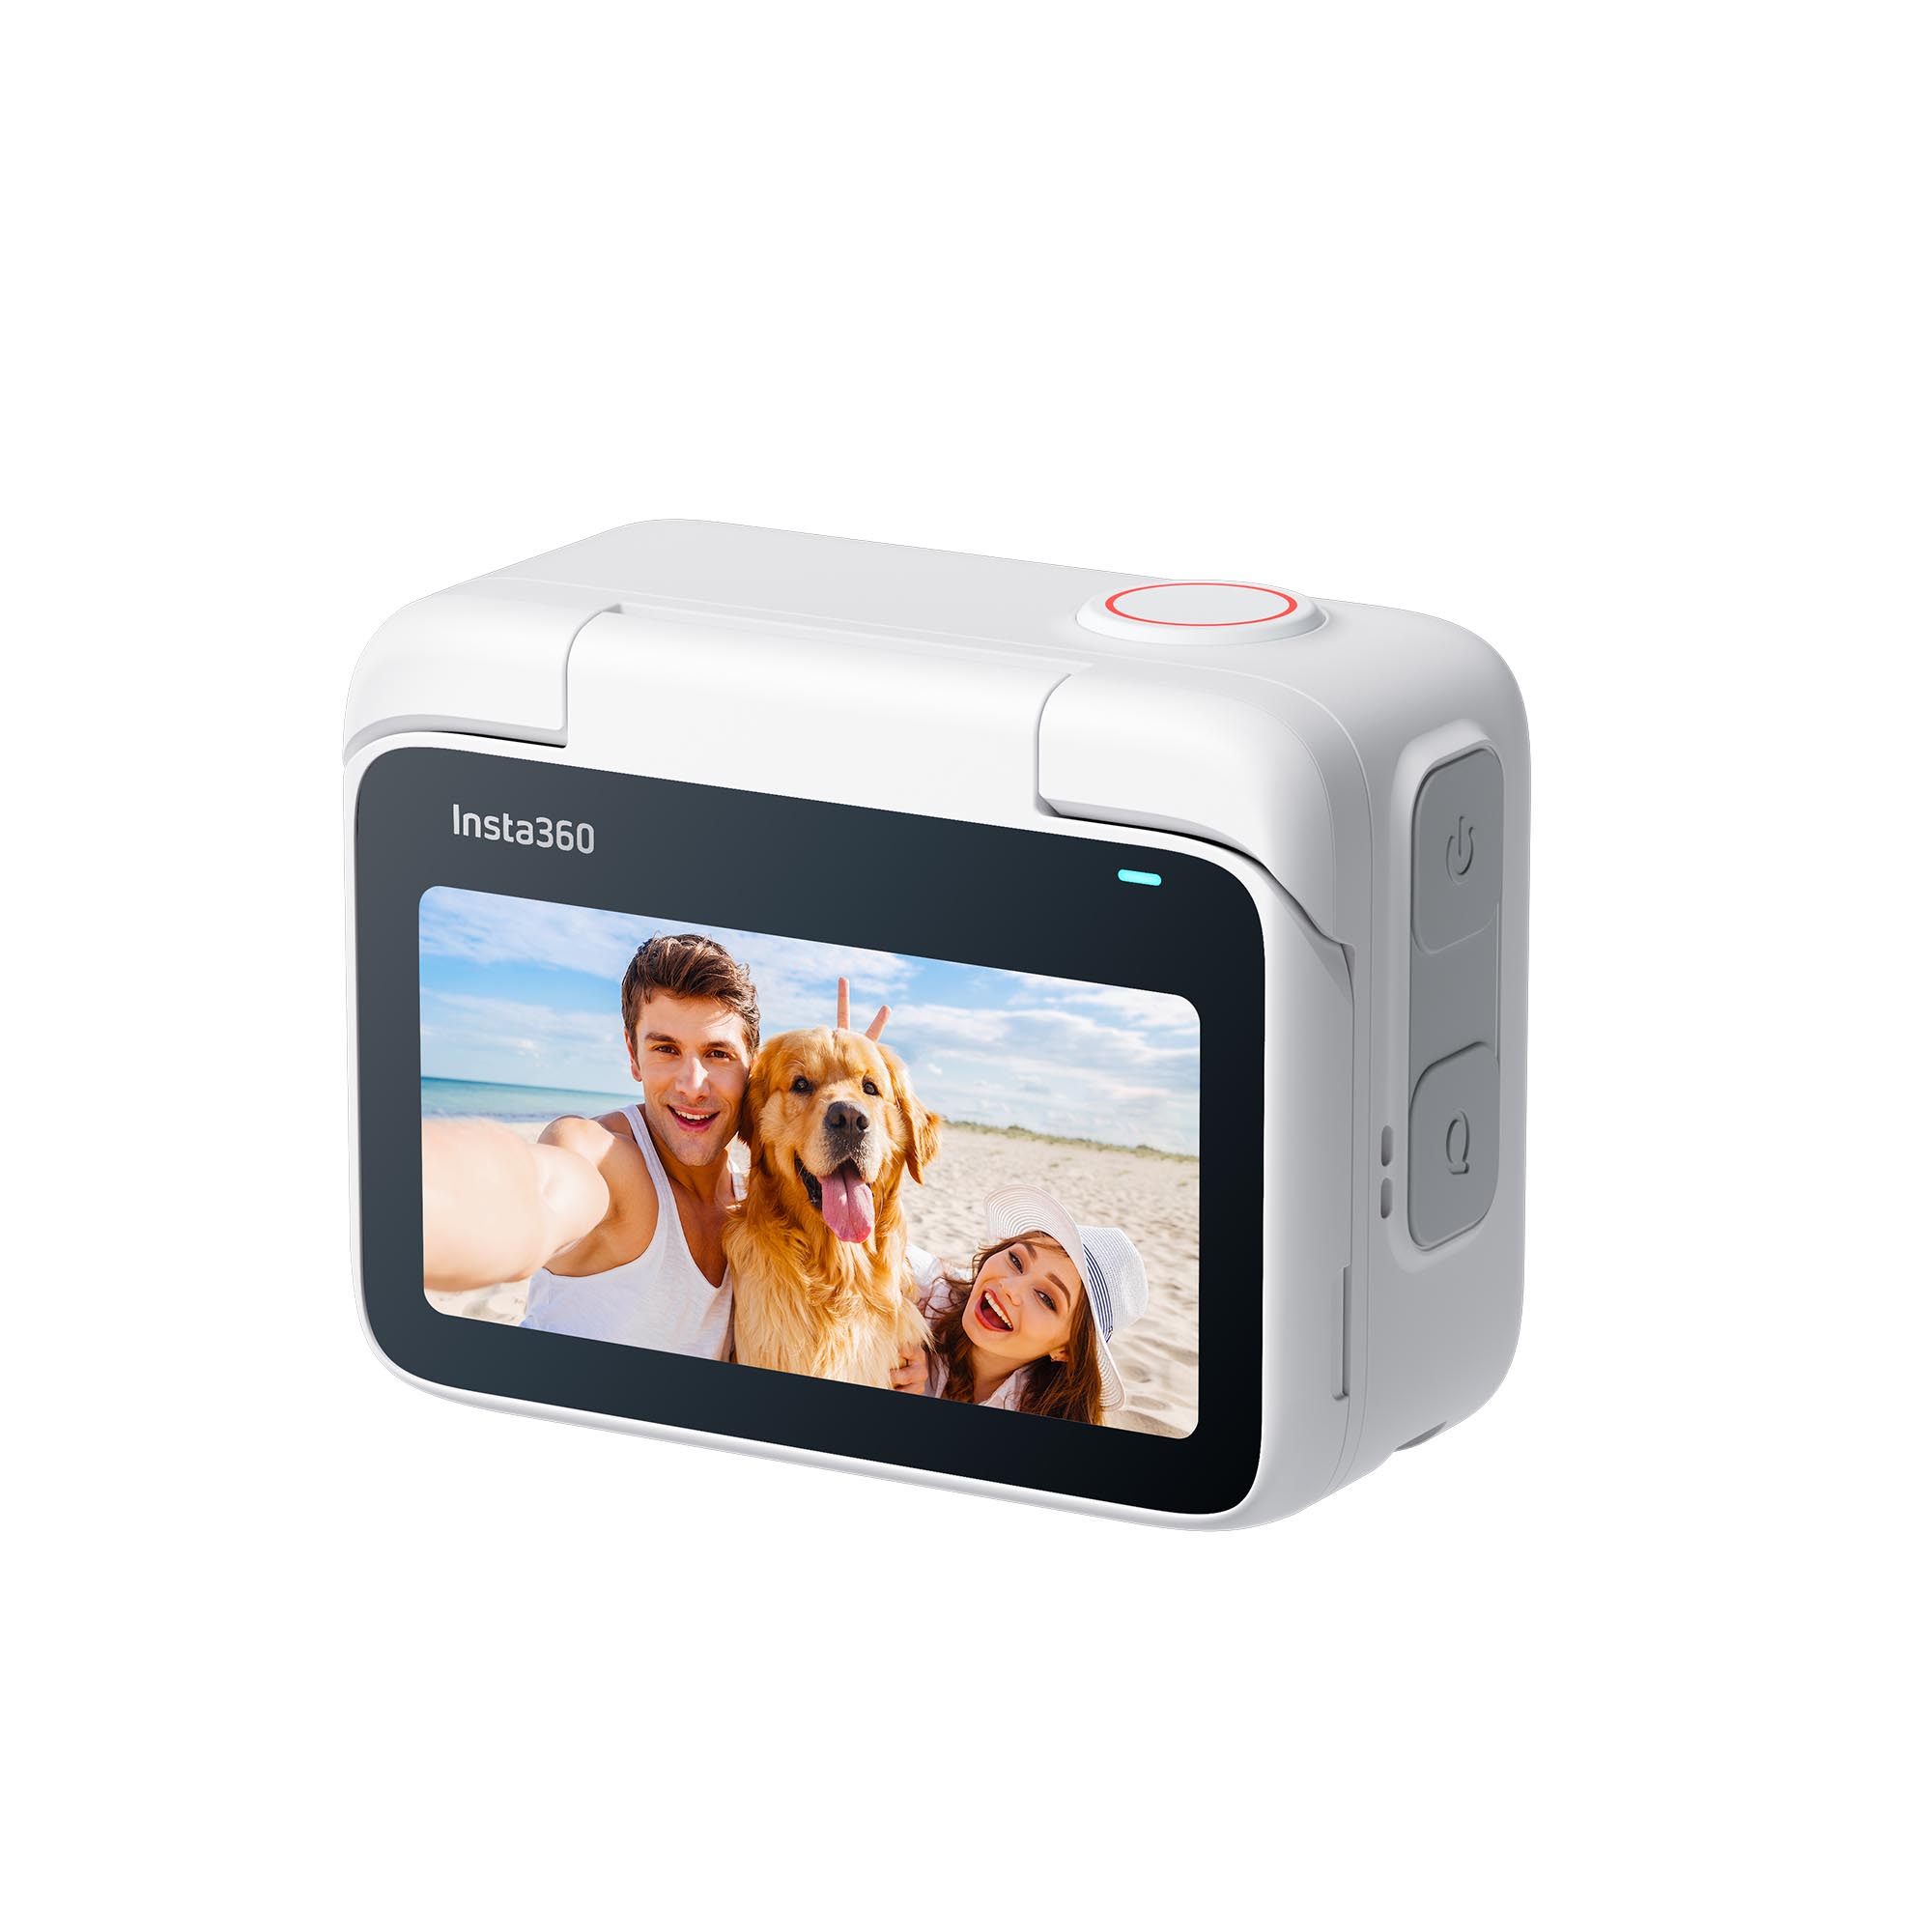 GO 3 - 超軽量・超小型アクションカメラ - Insta360 - 株式会社アーキ